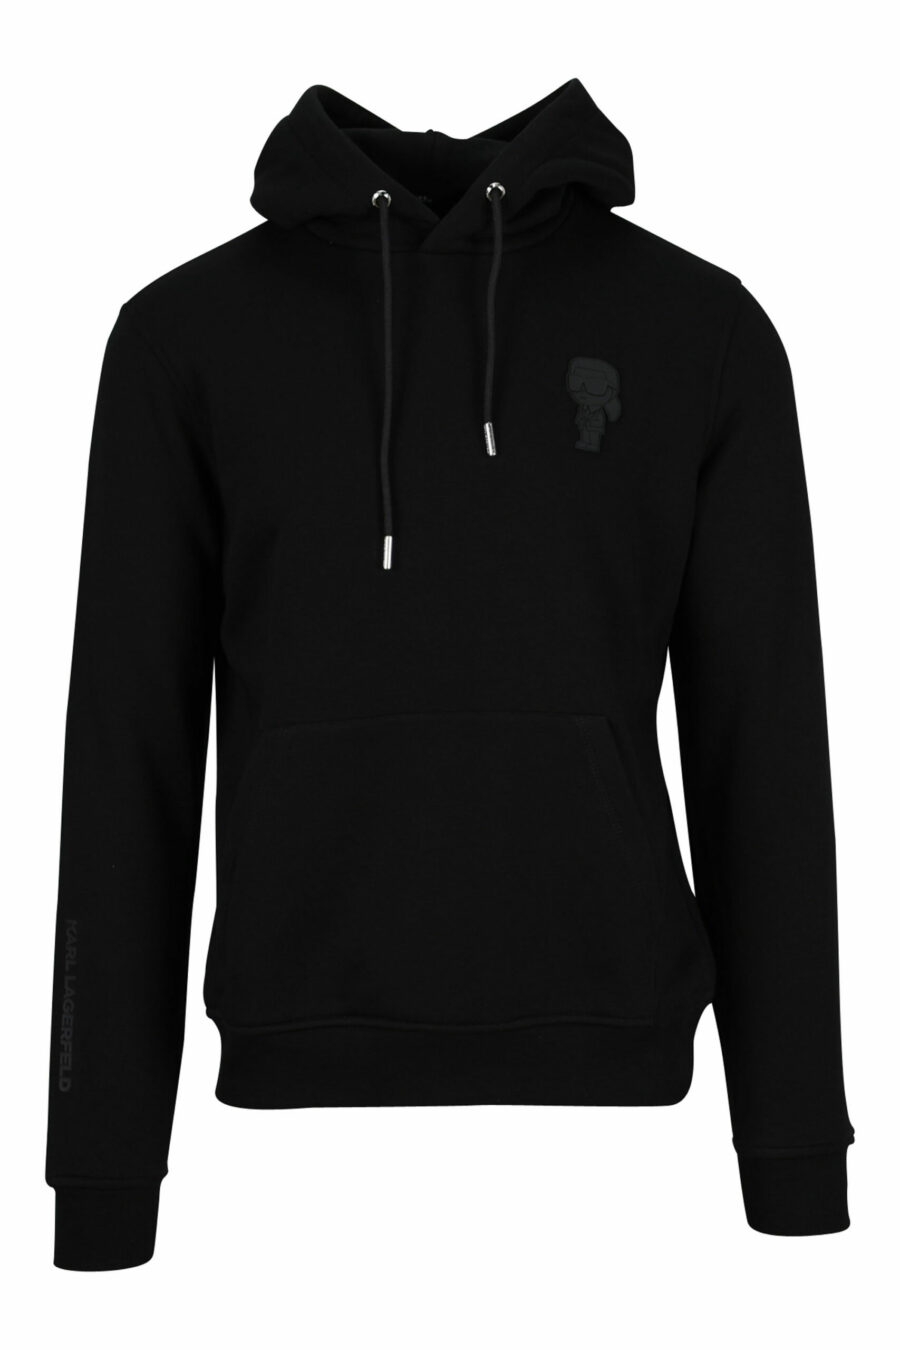 Black hooded sweatshirt with monochrome rubber mini-logo - 4062226393577 4 scaled